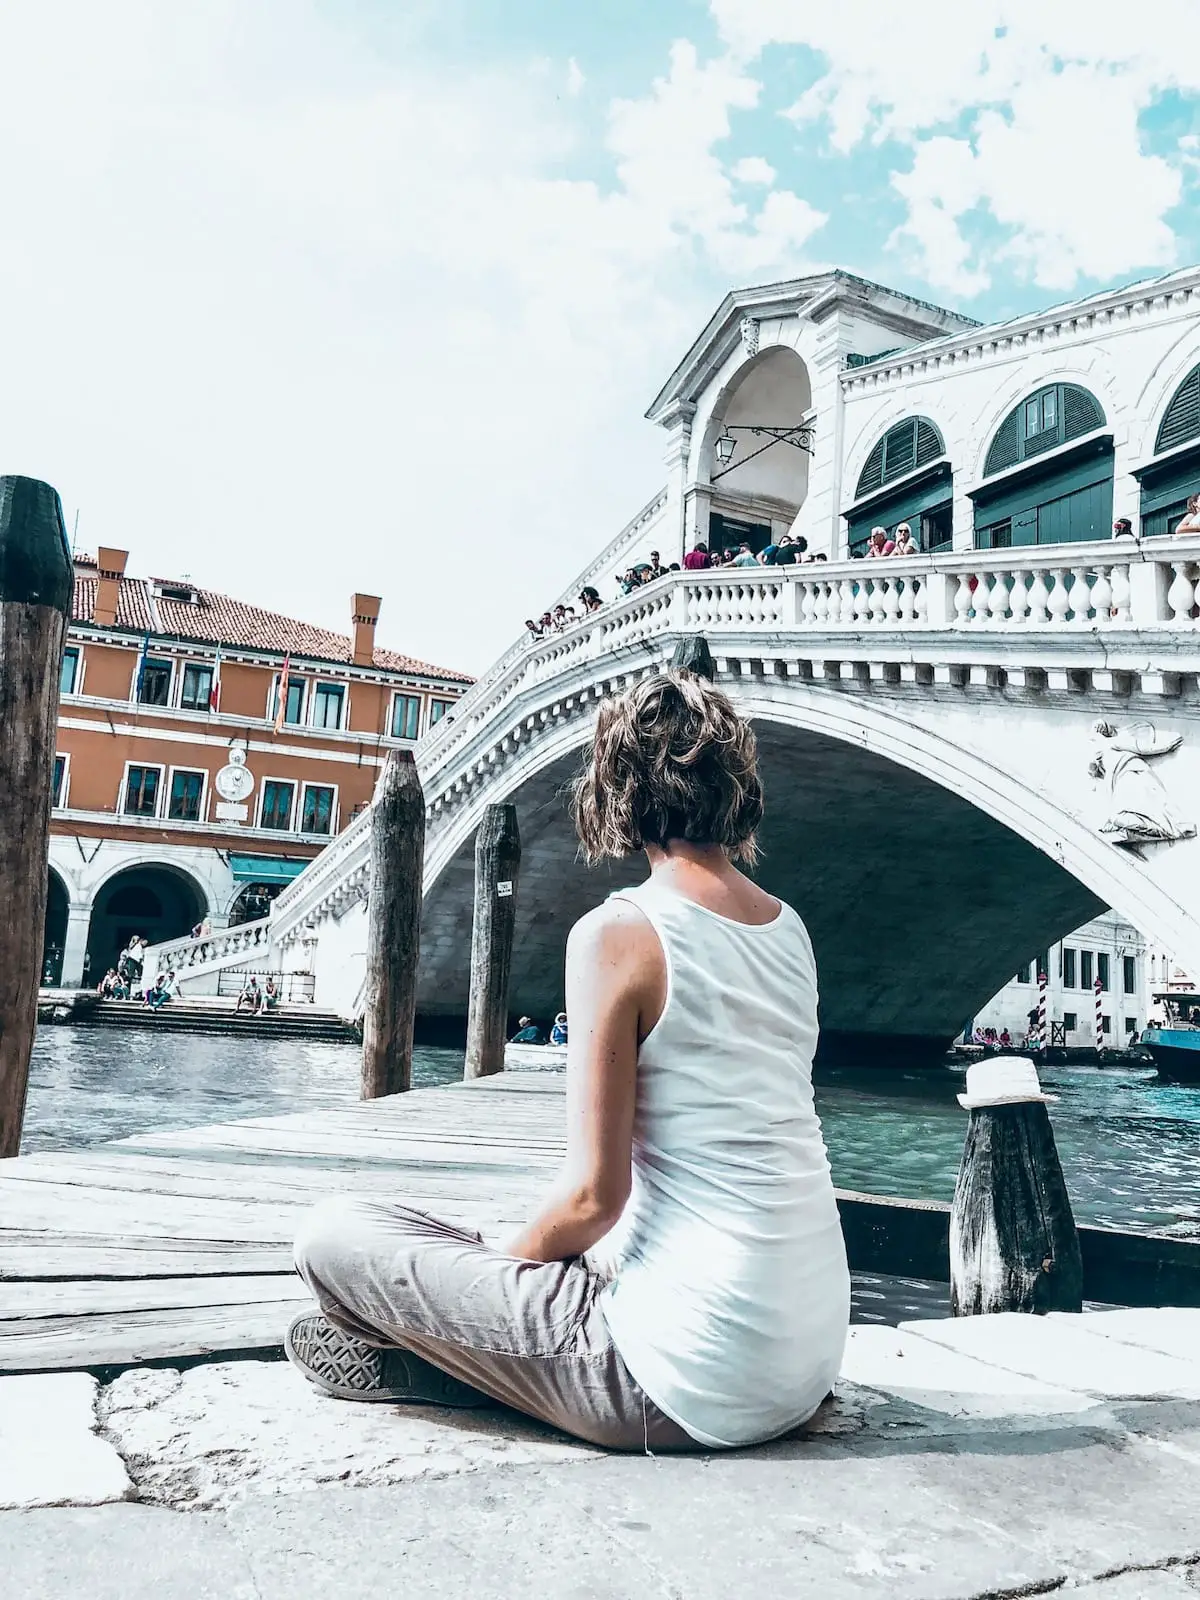 Rialtobrücke, Venedig 